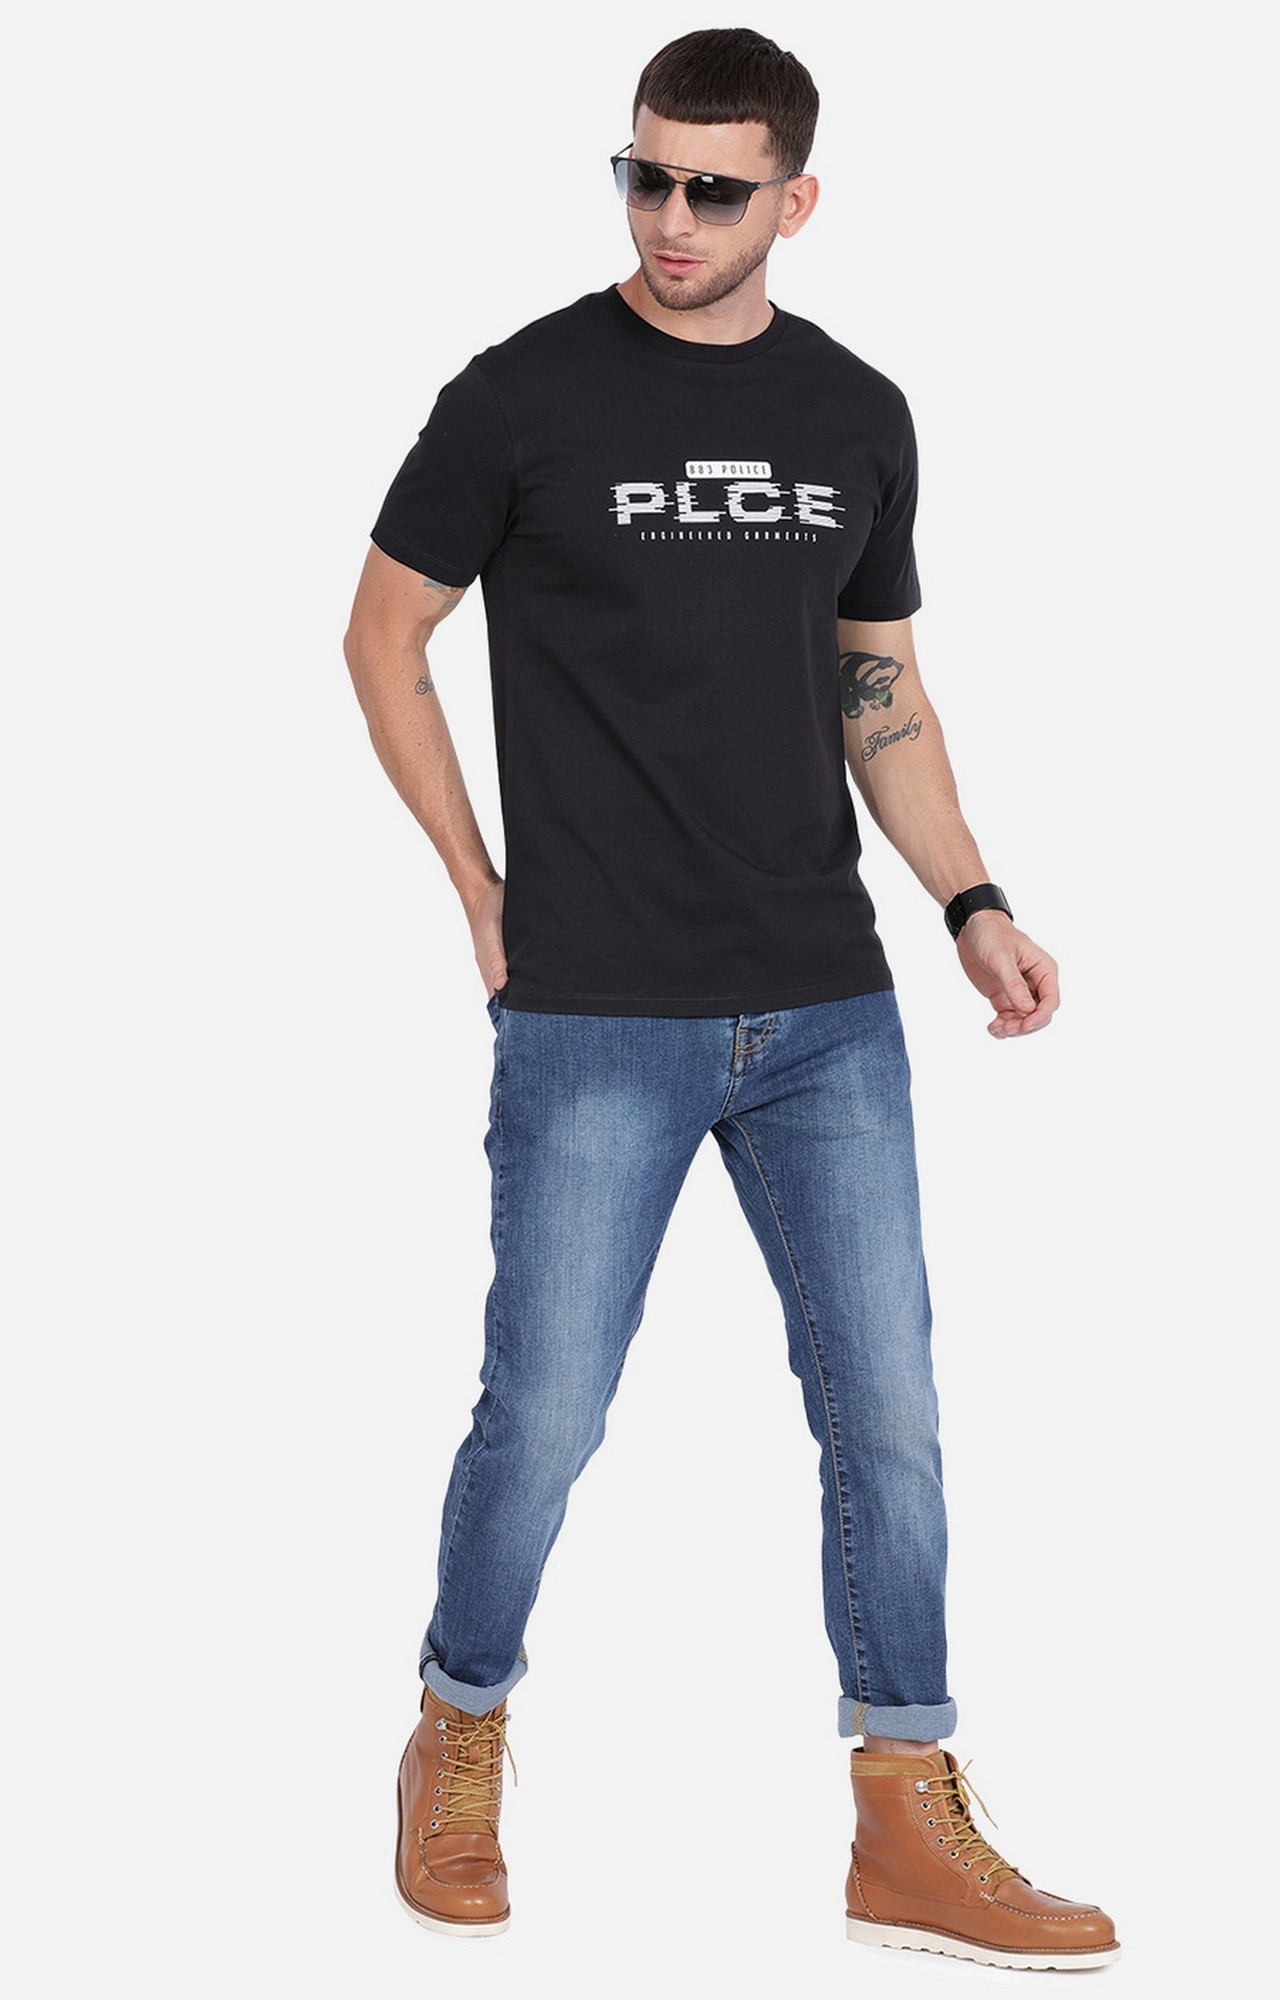 883 Police | Men's Black Cotton Typographic Printed T-Shirt 1